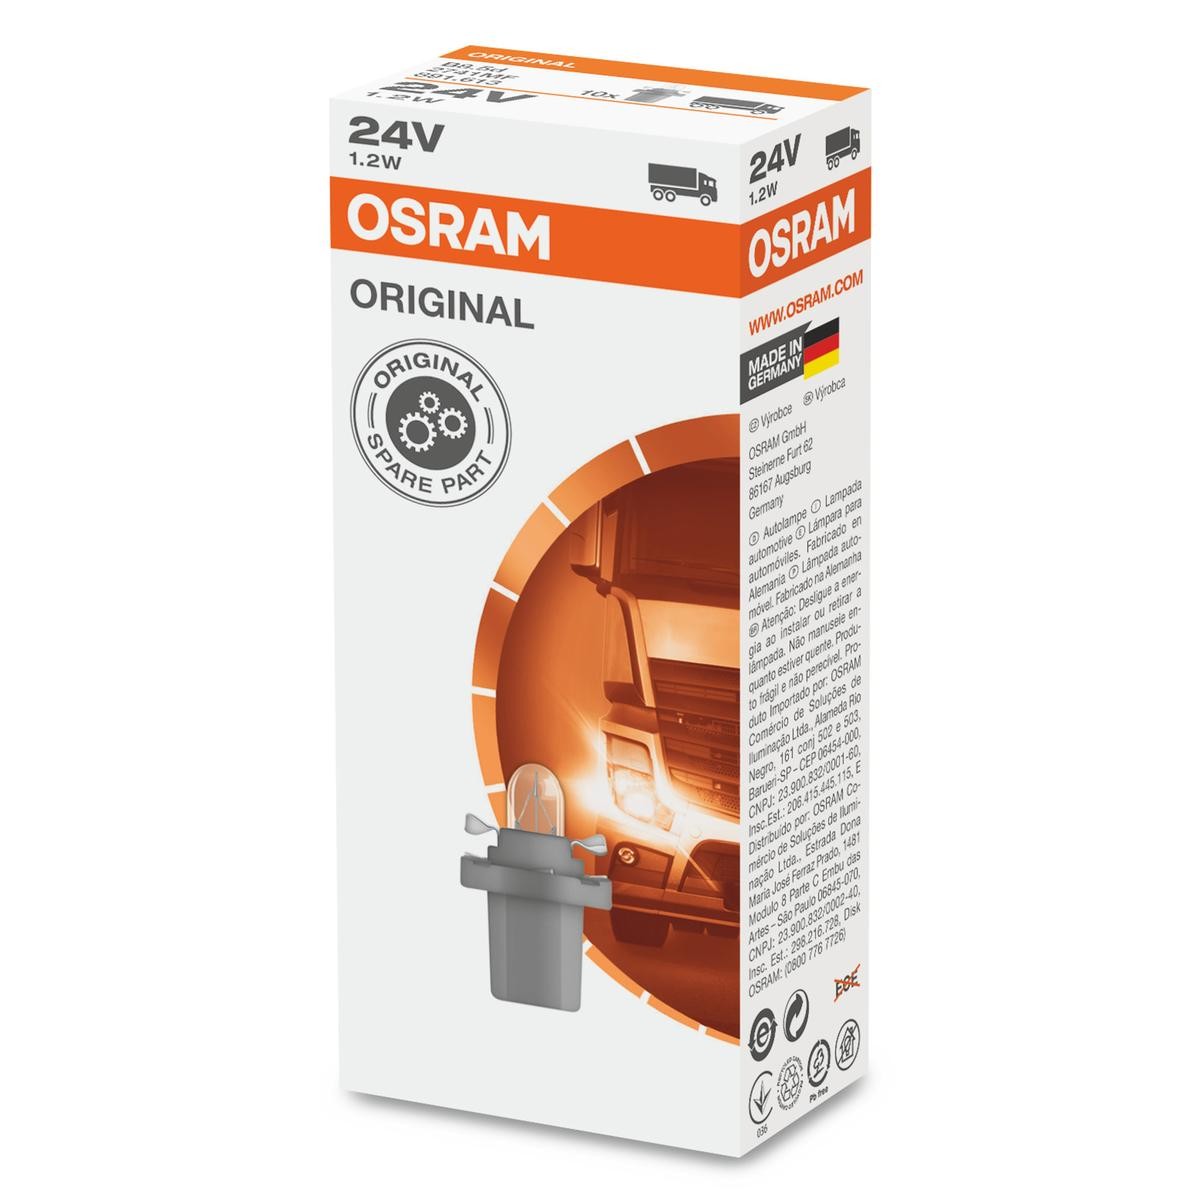 OSRAM ORIGINAL LINE 24V 1,2W, Sockelglühlampe, B8.5d Glühlampe, Instrumentenbeleuchtung 2741MF kaufen